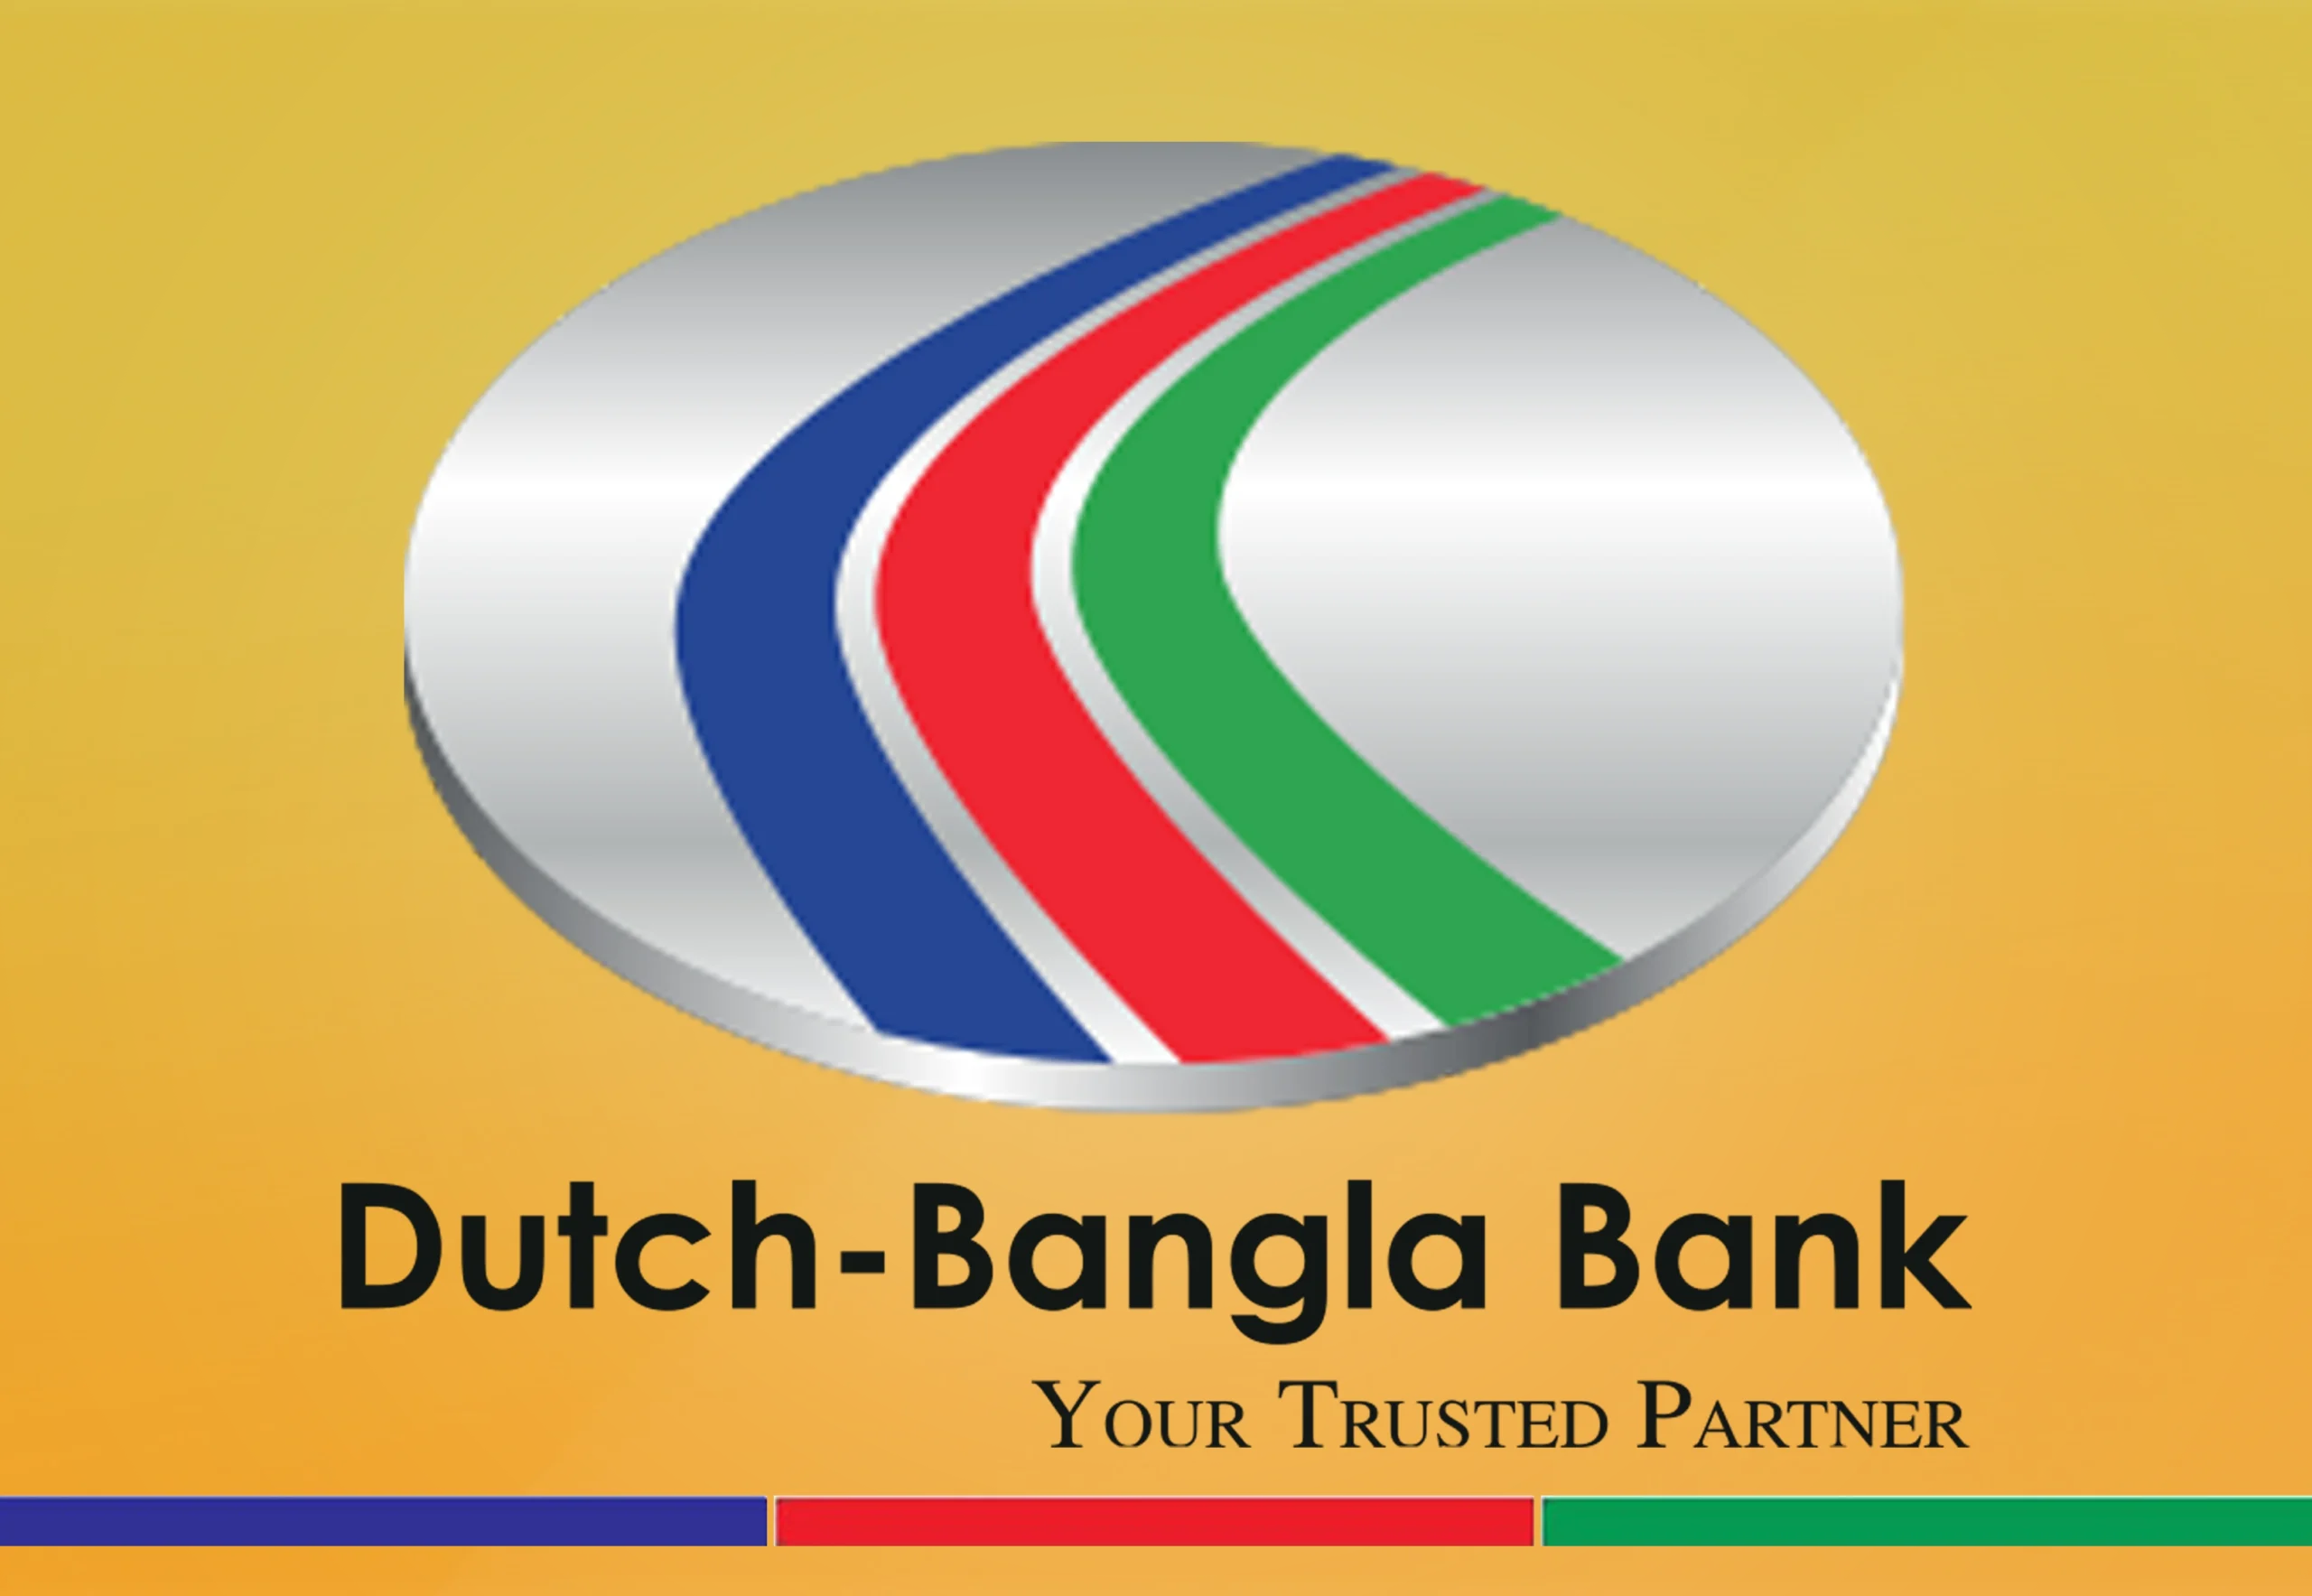  Dutch-Bangla Bank Ltd. Logo on yellow background